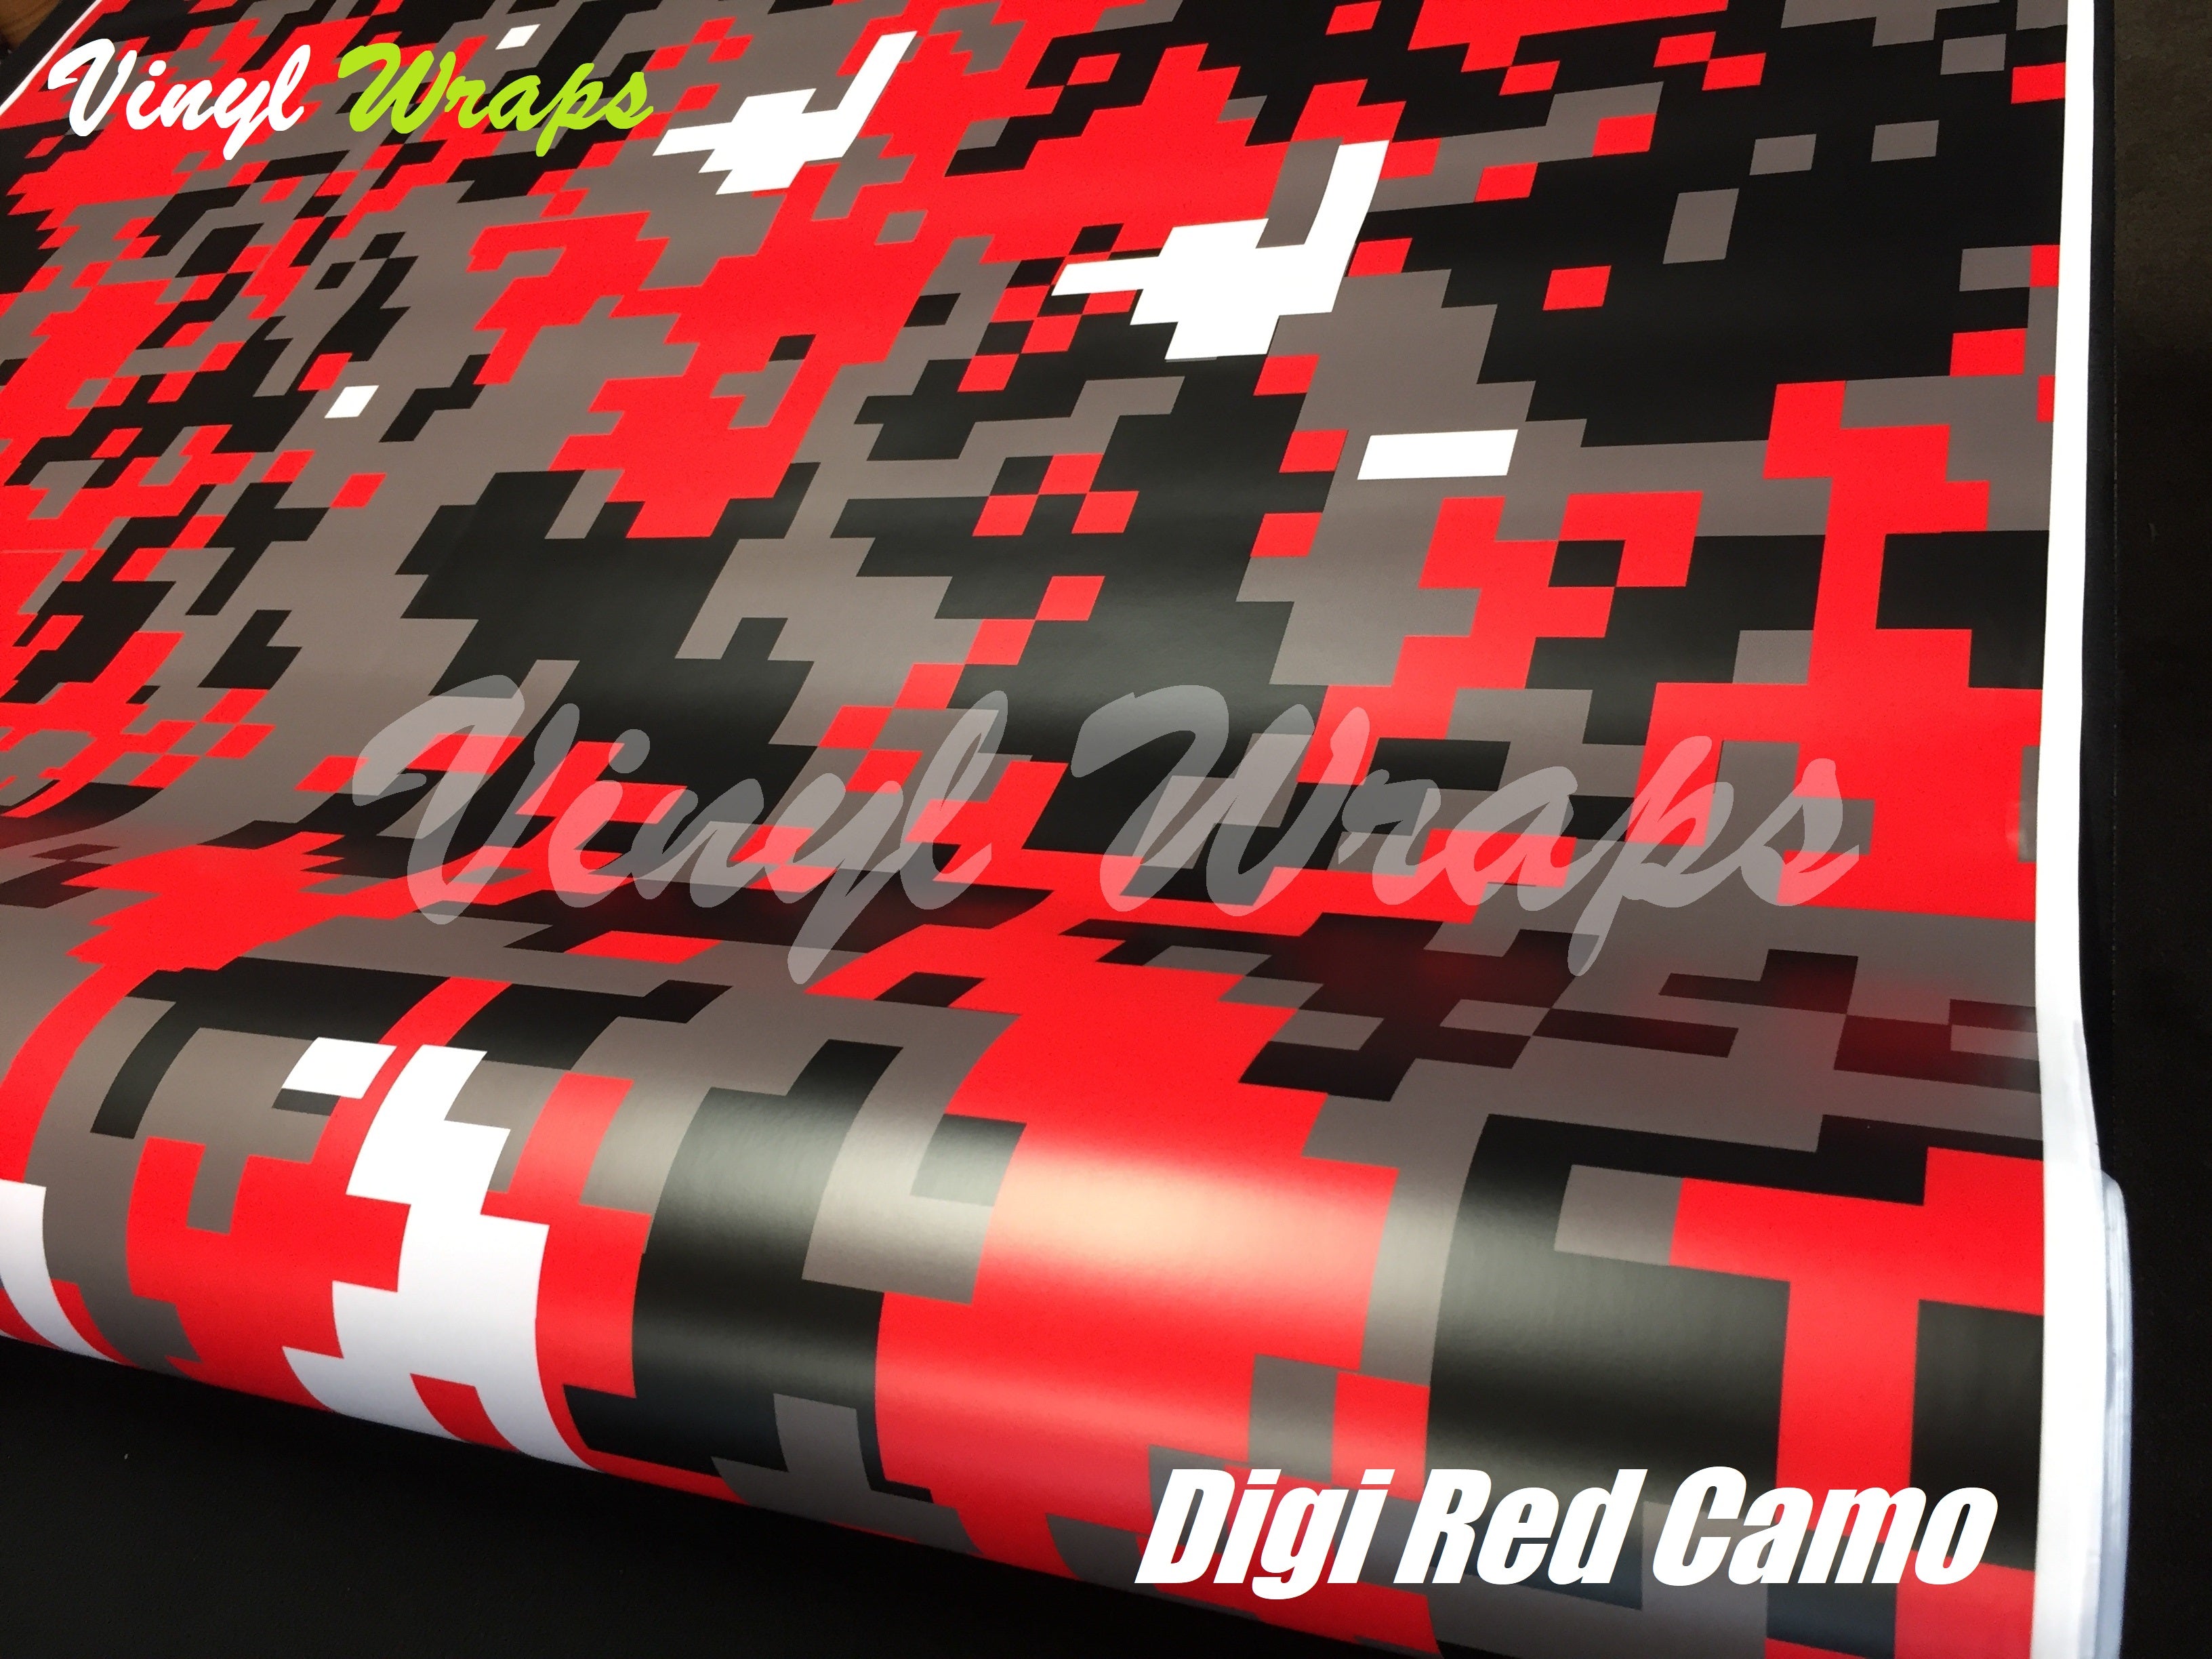 Digital Red Camo Vinyl Wrap